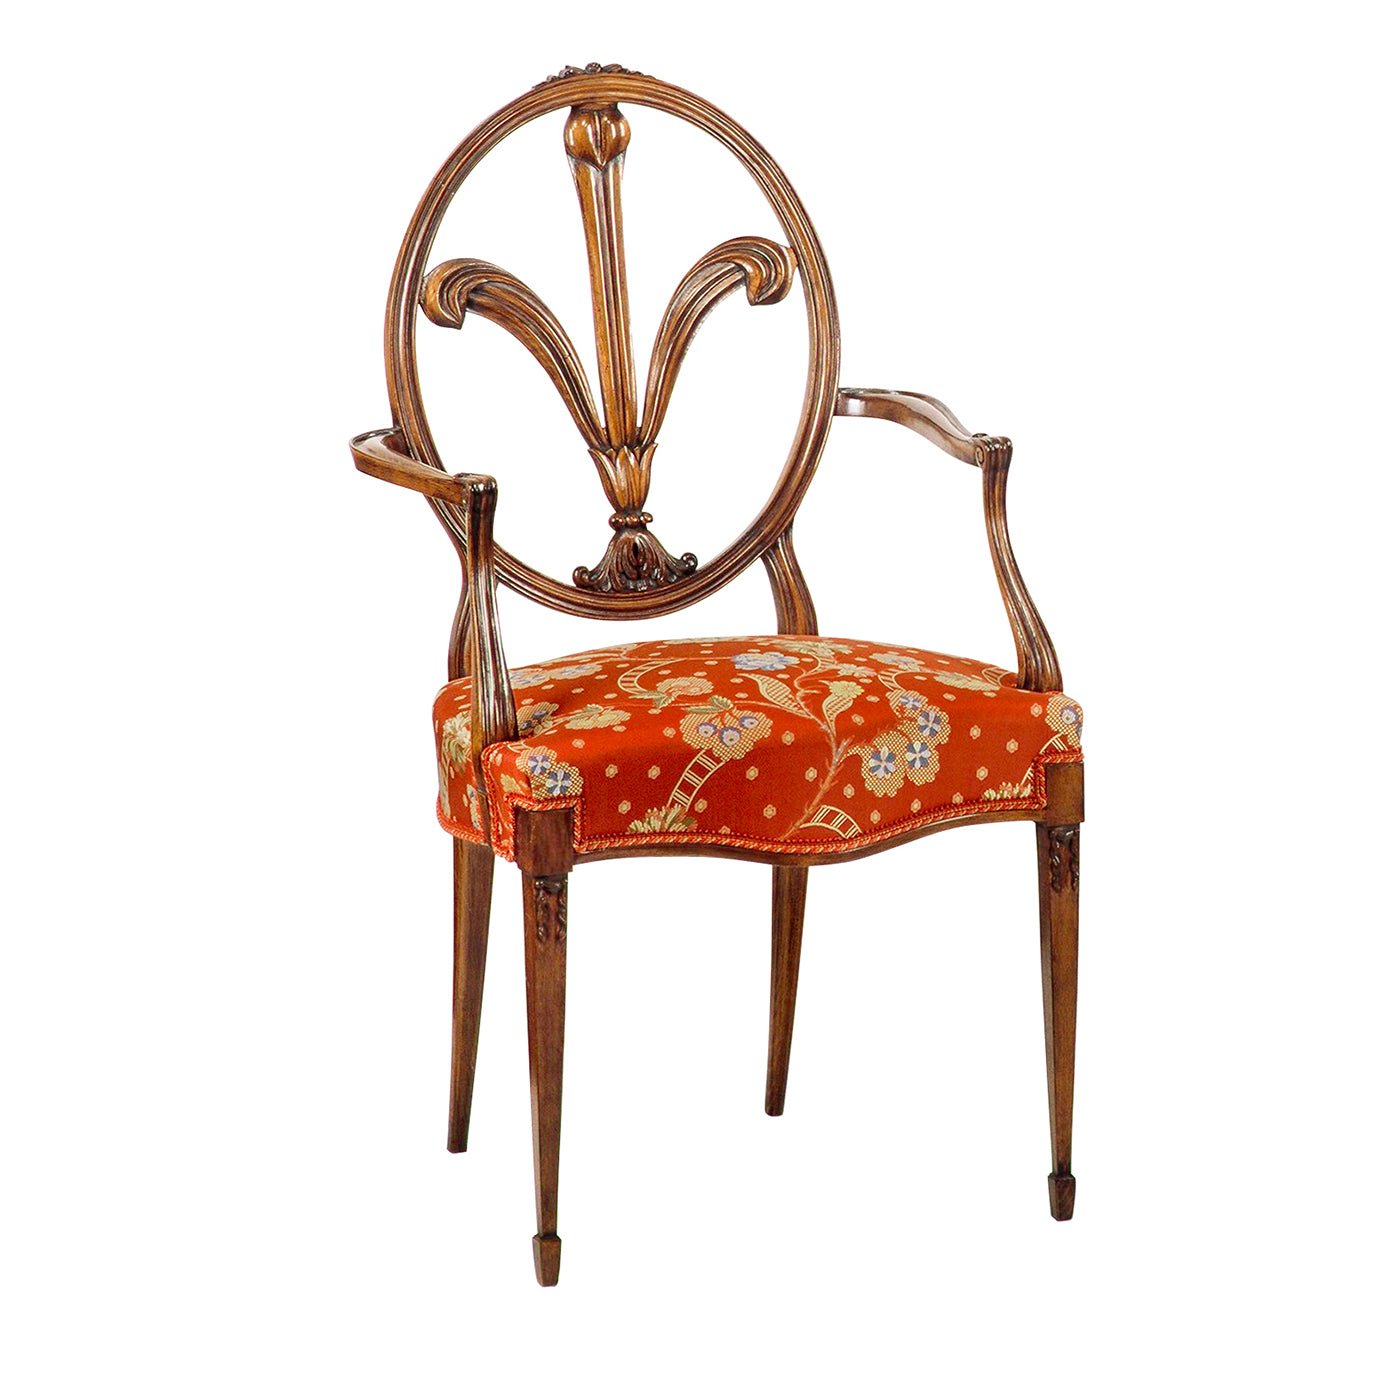 Hepplewhite-Style Red-Cushion Chair #2 - Alternative view 1